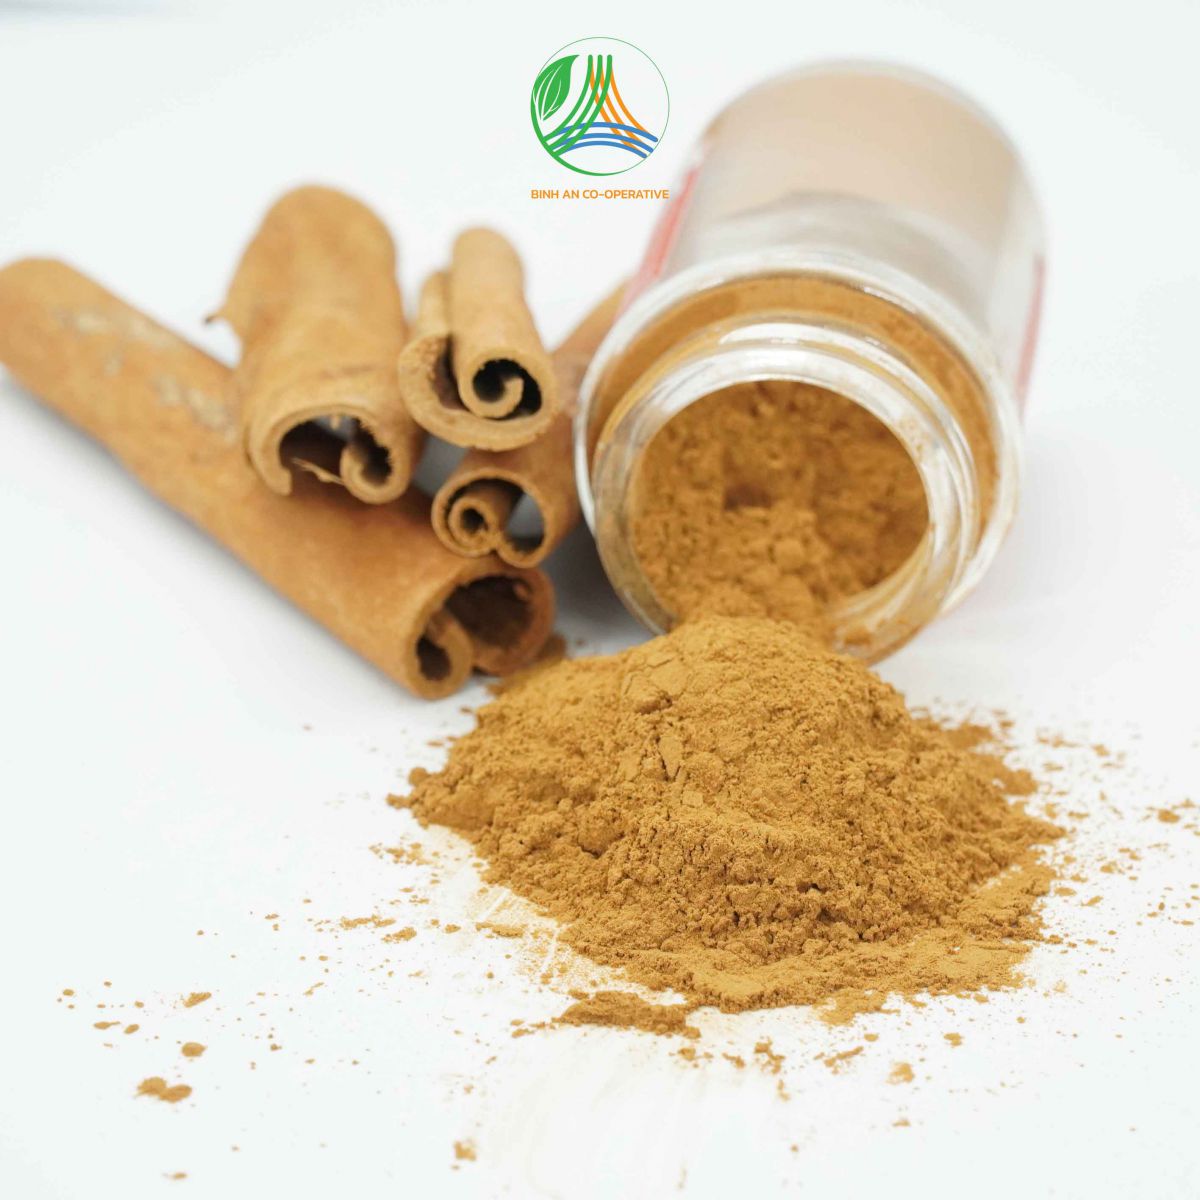 Yen Bai: The model of growing cinnamon according to International Organic Standards